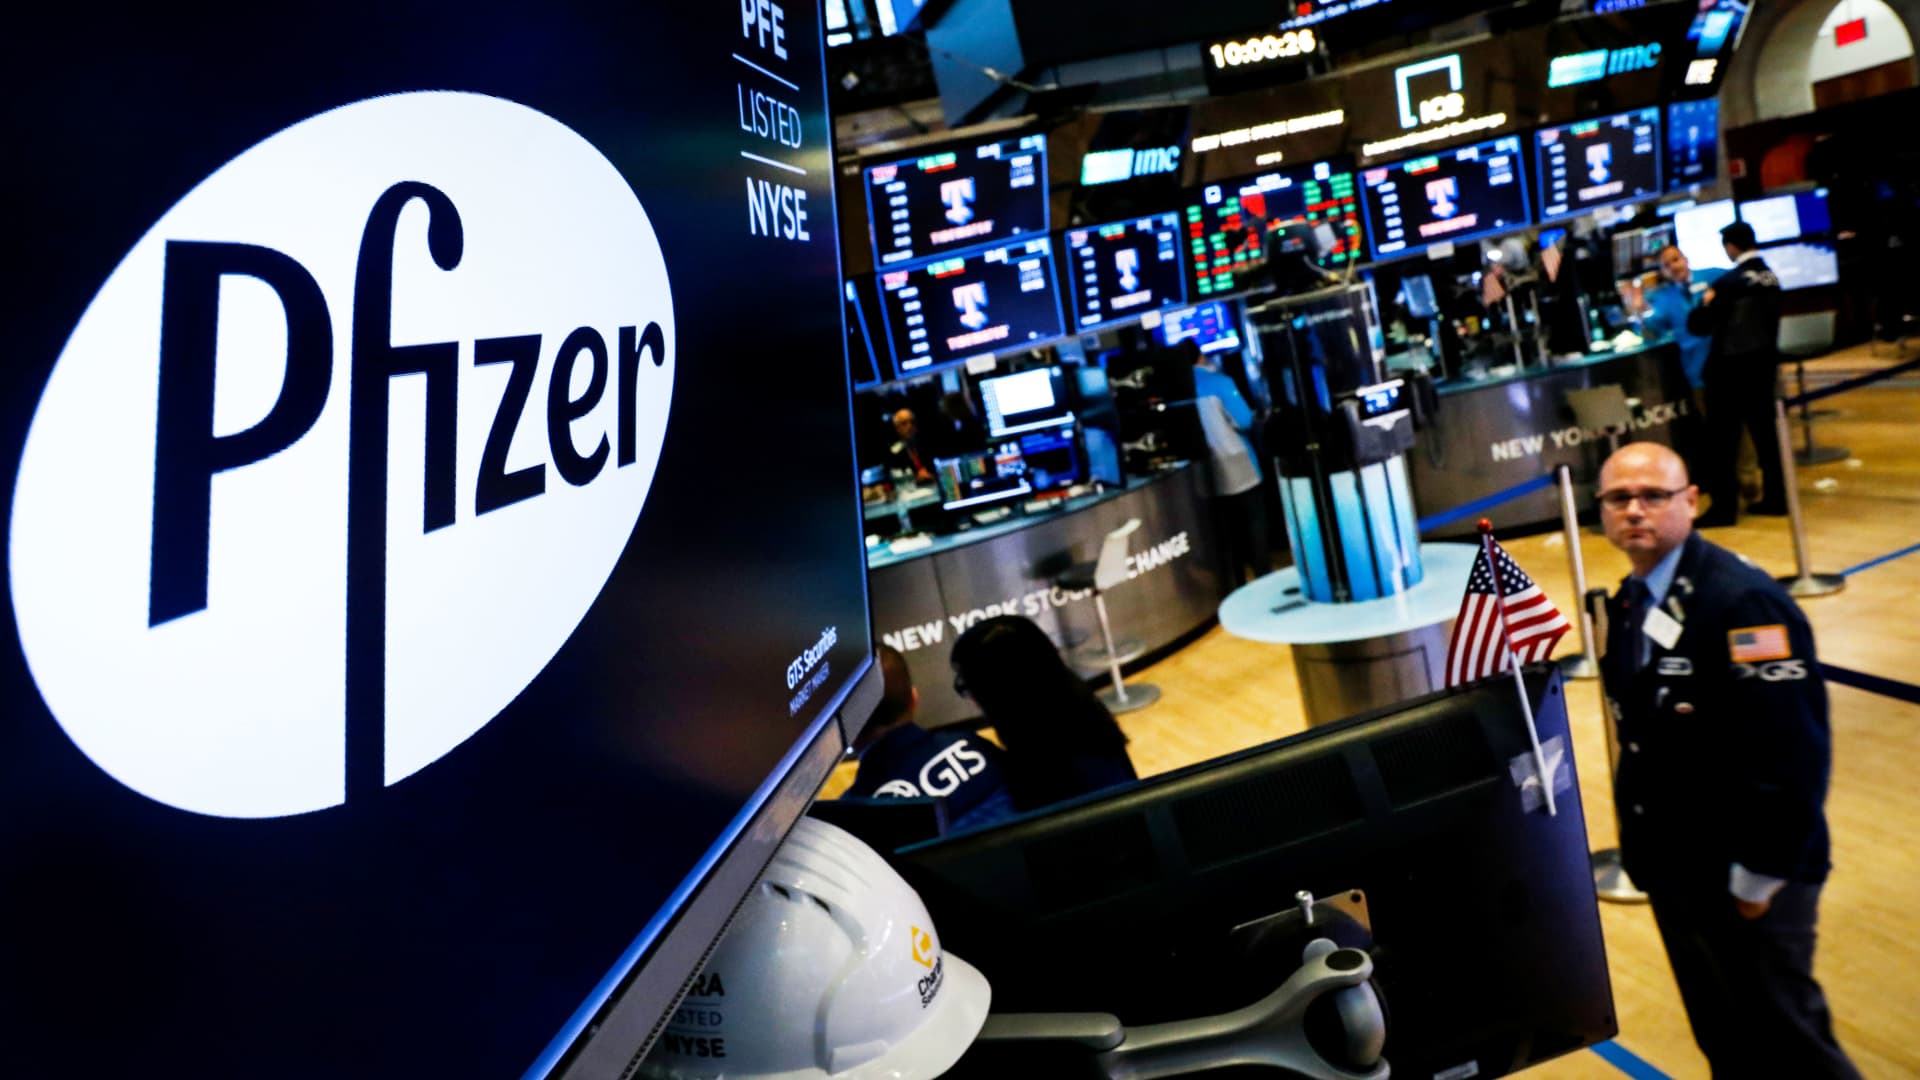 Pfizer to raise $31 billion in debt offering to fund Seagen acquisition, SEC filing shows